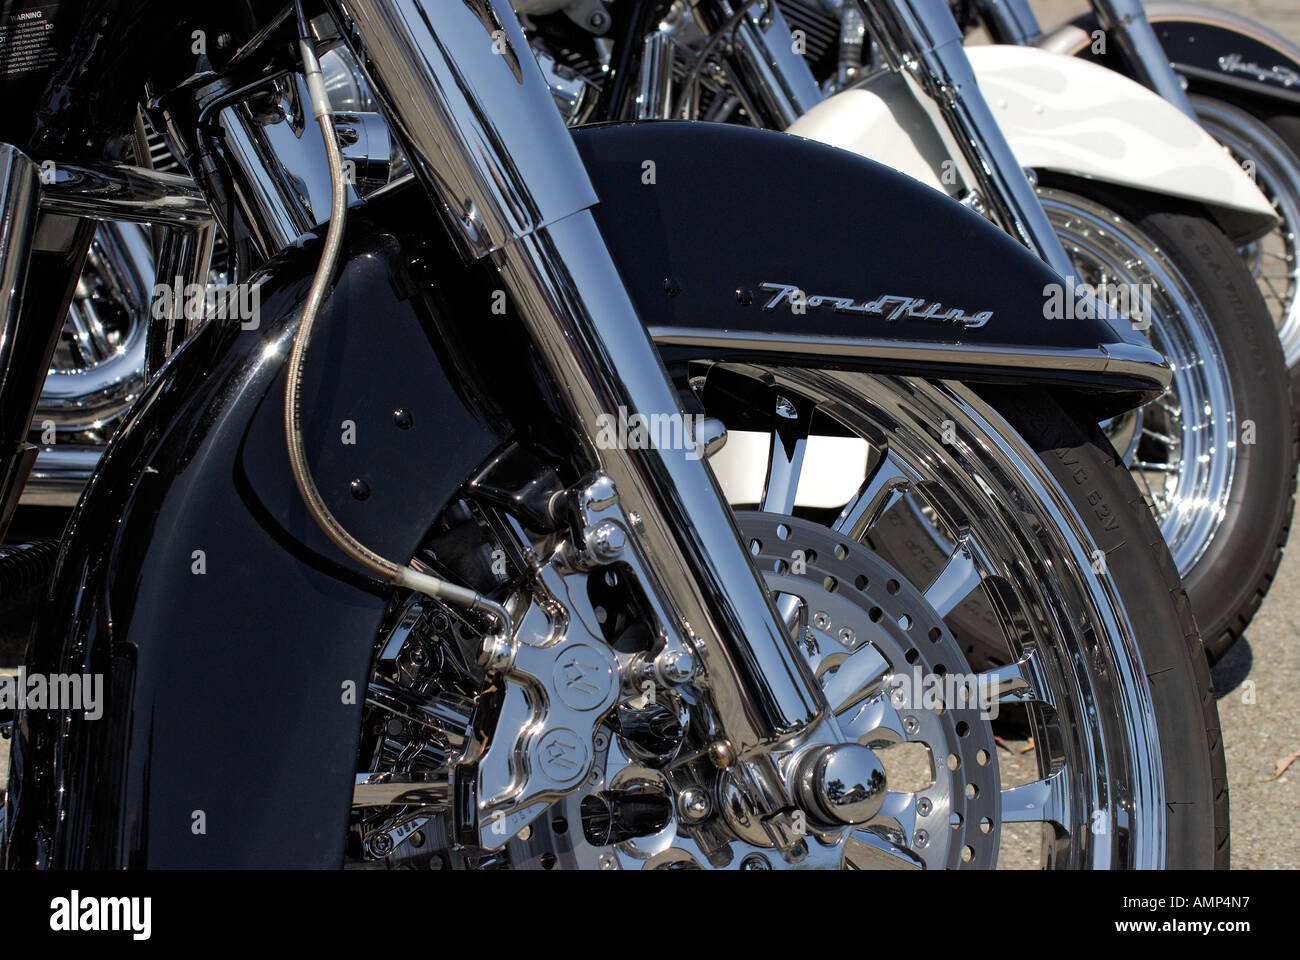 "Harley Davidson Road King' motociclo' Foto Stock